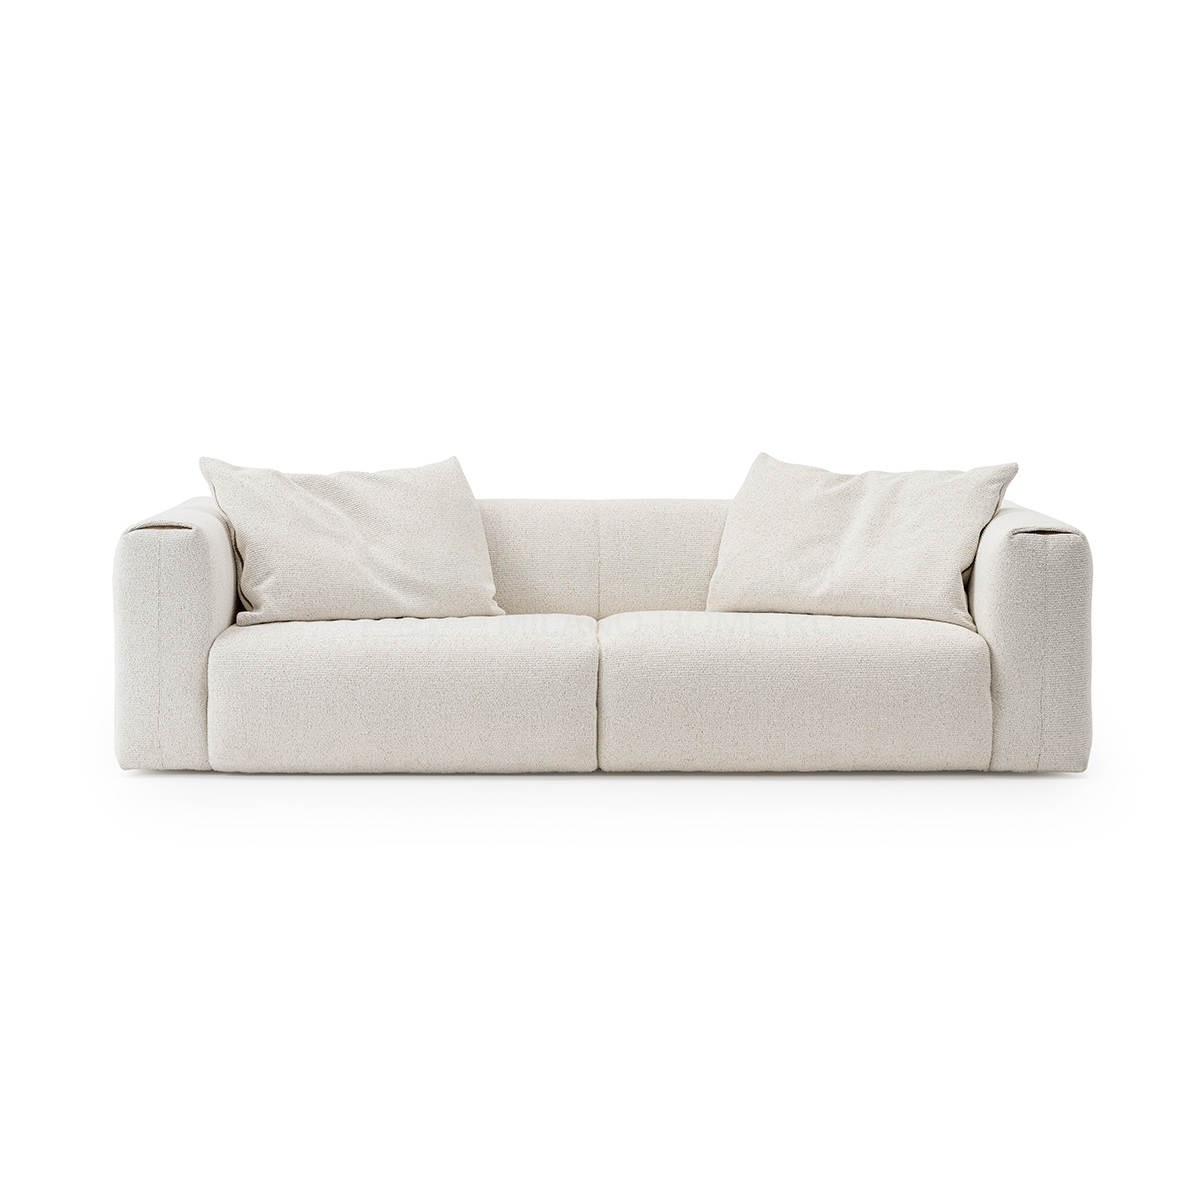 Прямой диван Soul sofa из Италии фабрики TURRI